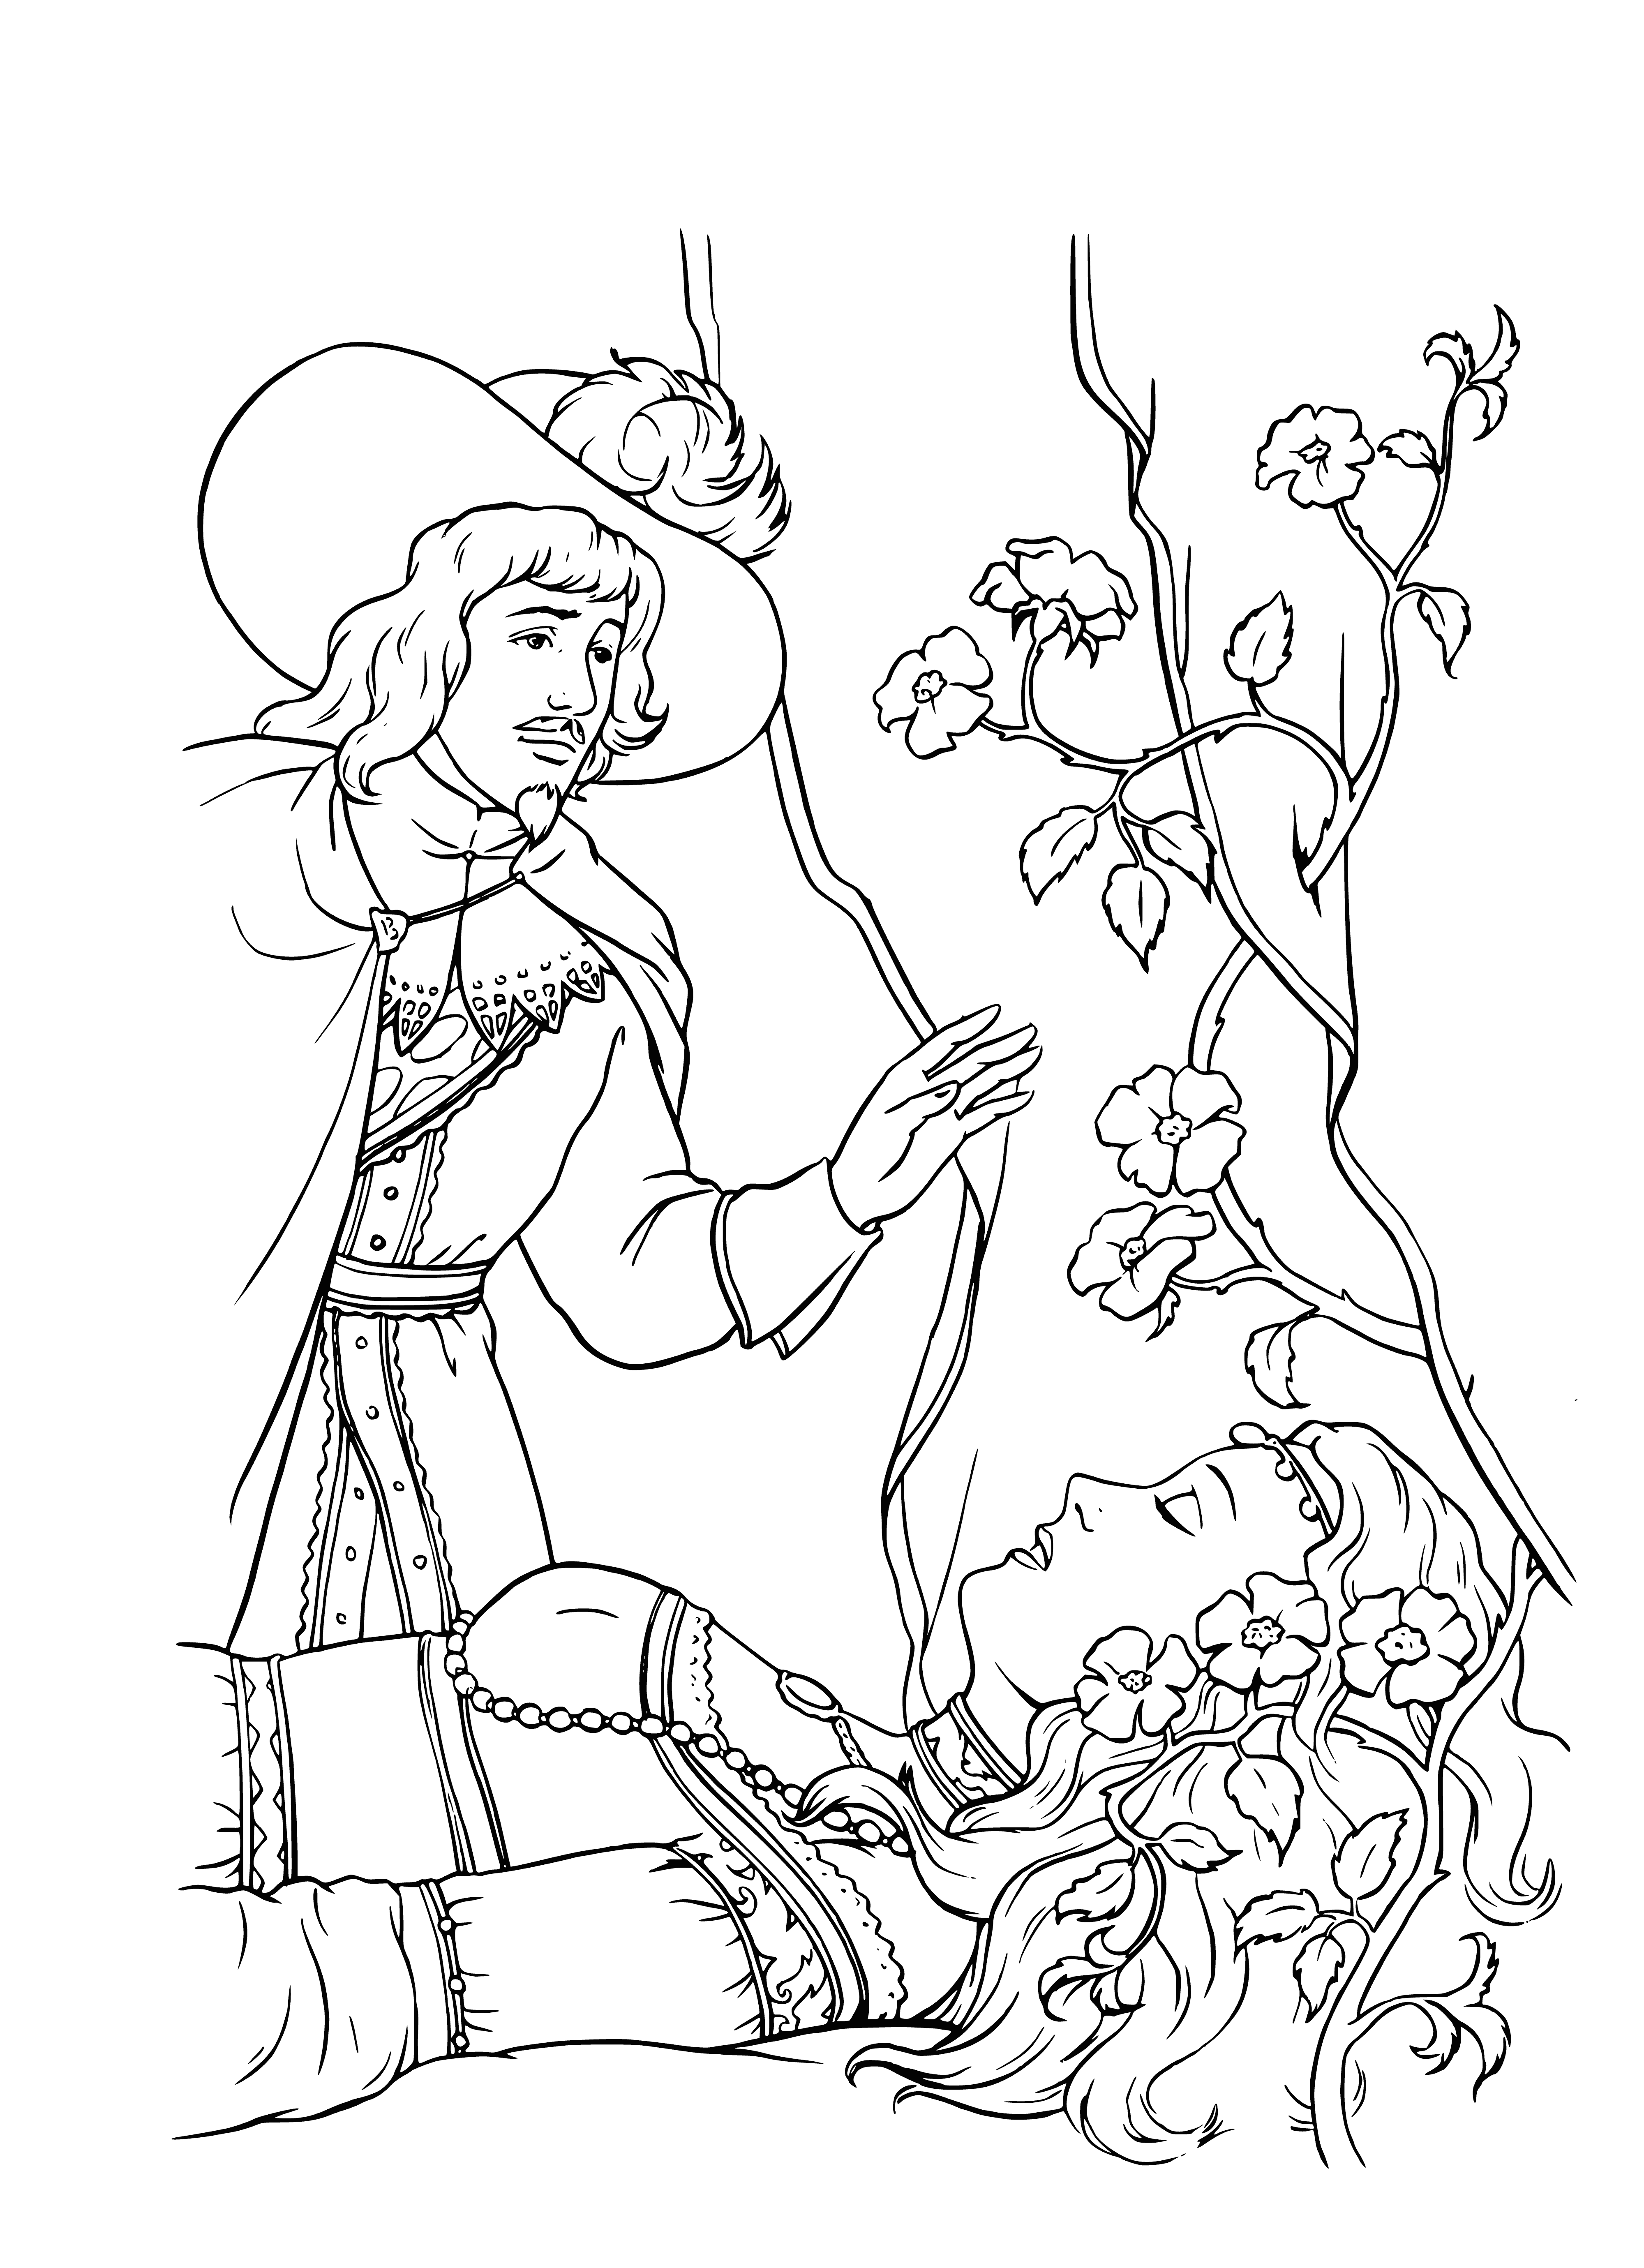 Prince and Princess coloring page